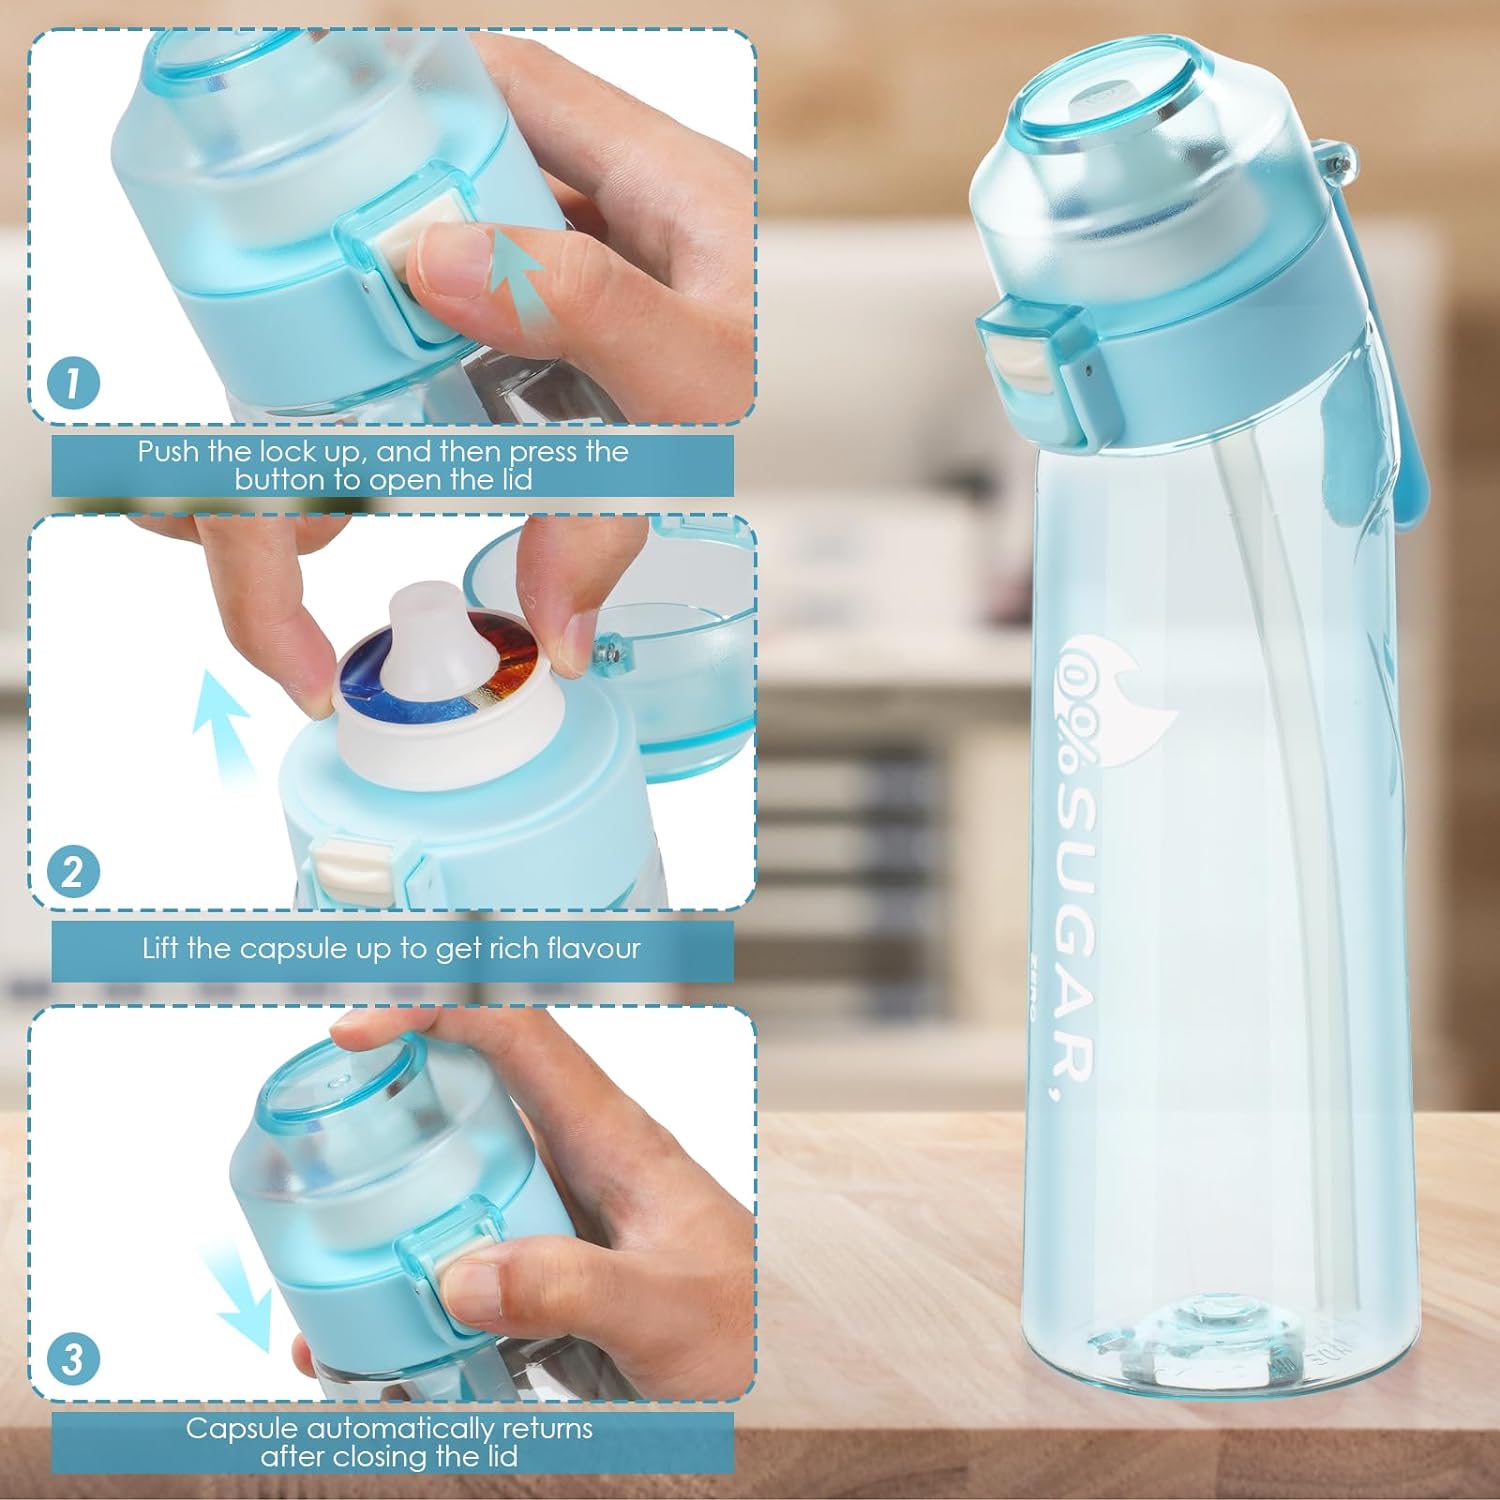 Sticla apa compatibila cu Capsule Air up!, arome naturale, pentru